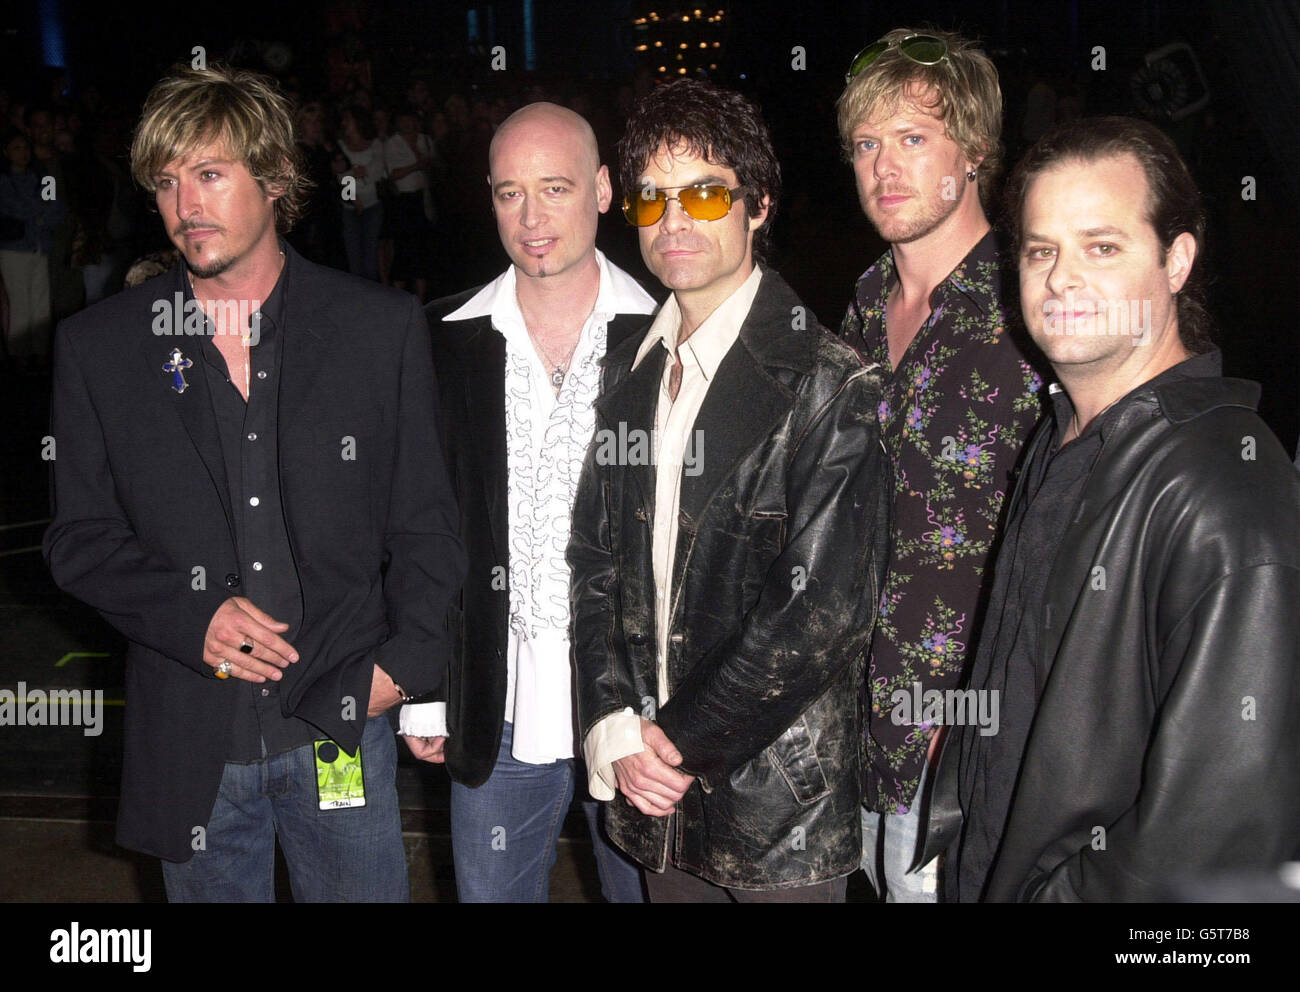 Grammy award winners Train arrive backstage at MTV's taping of Icon honoring Aerosmith. Stock Photo